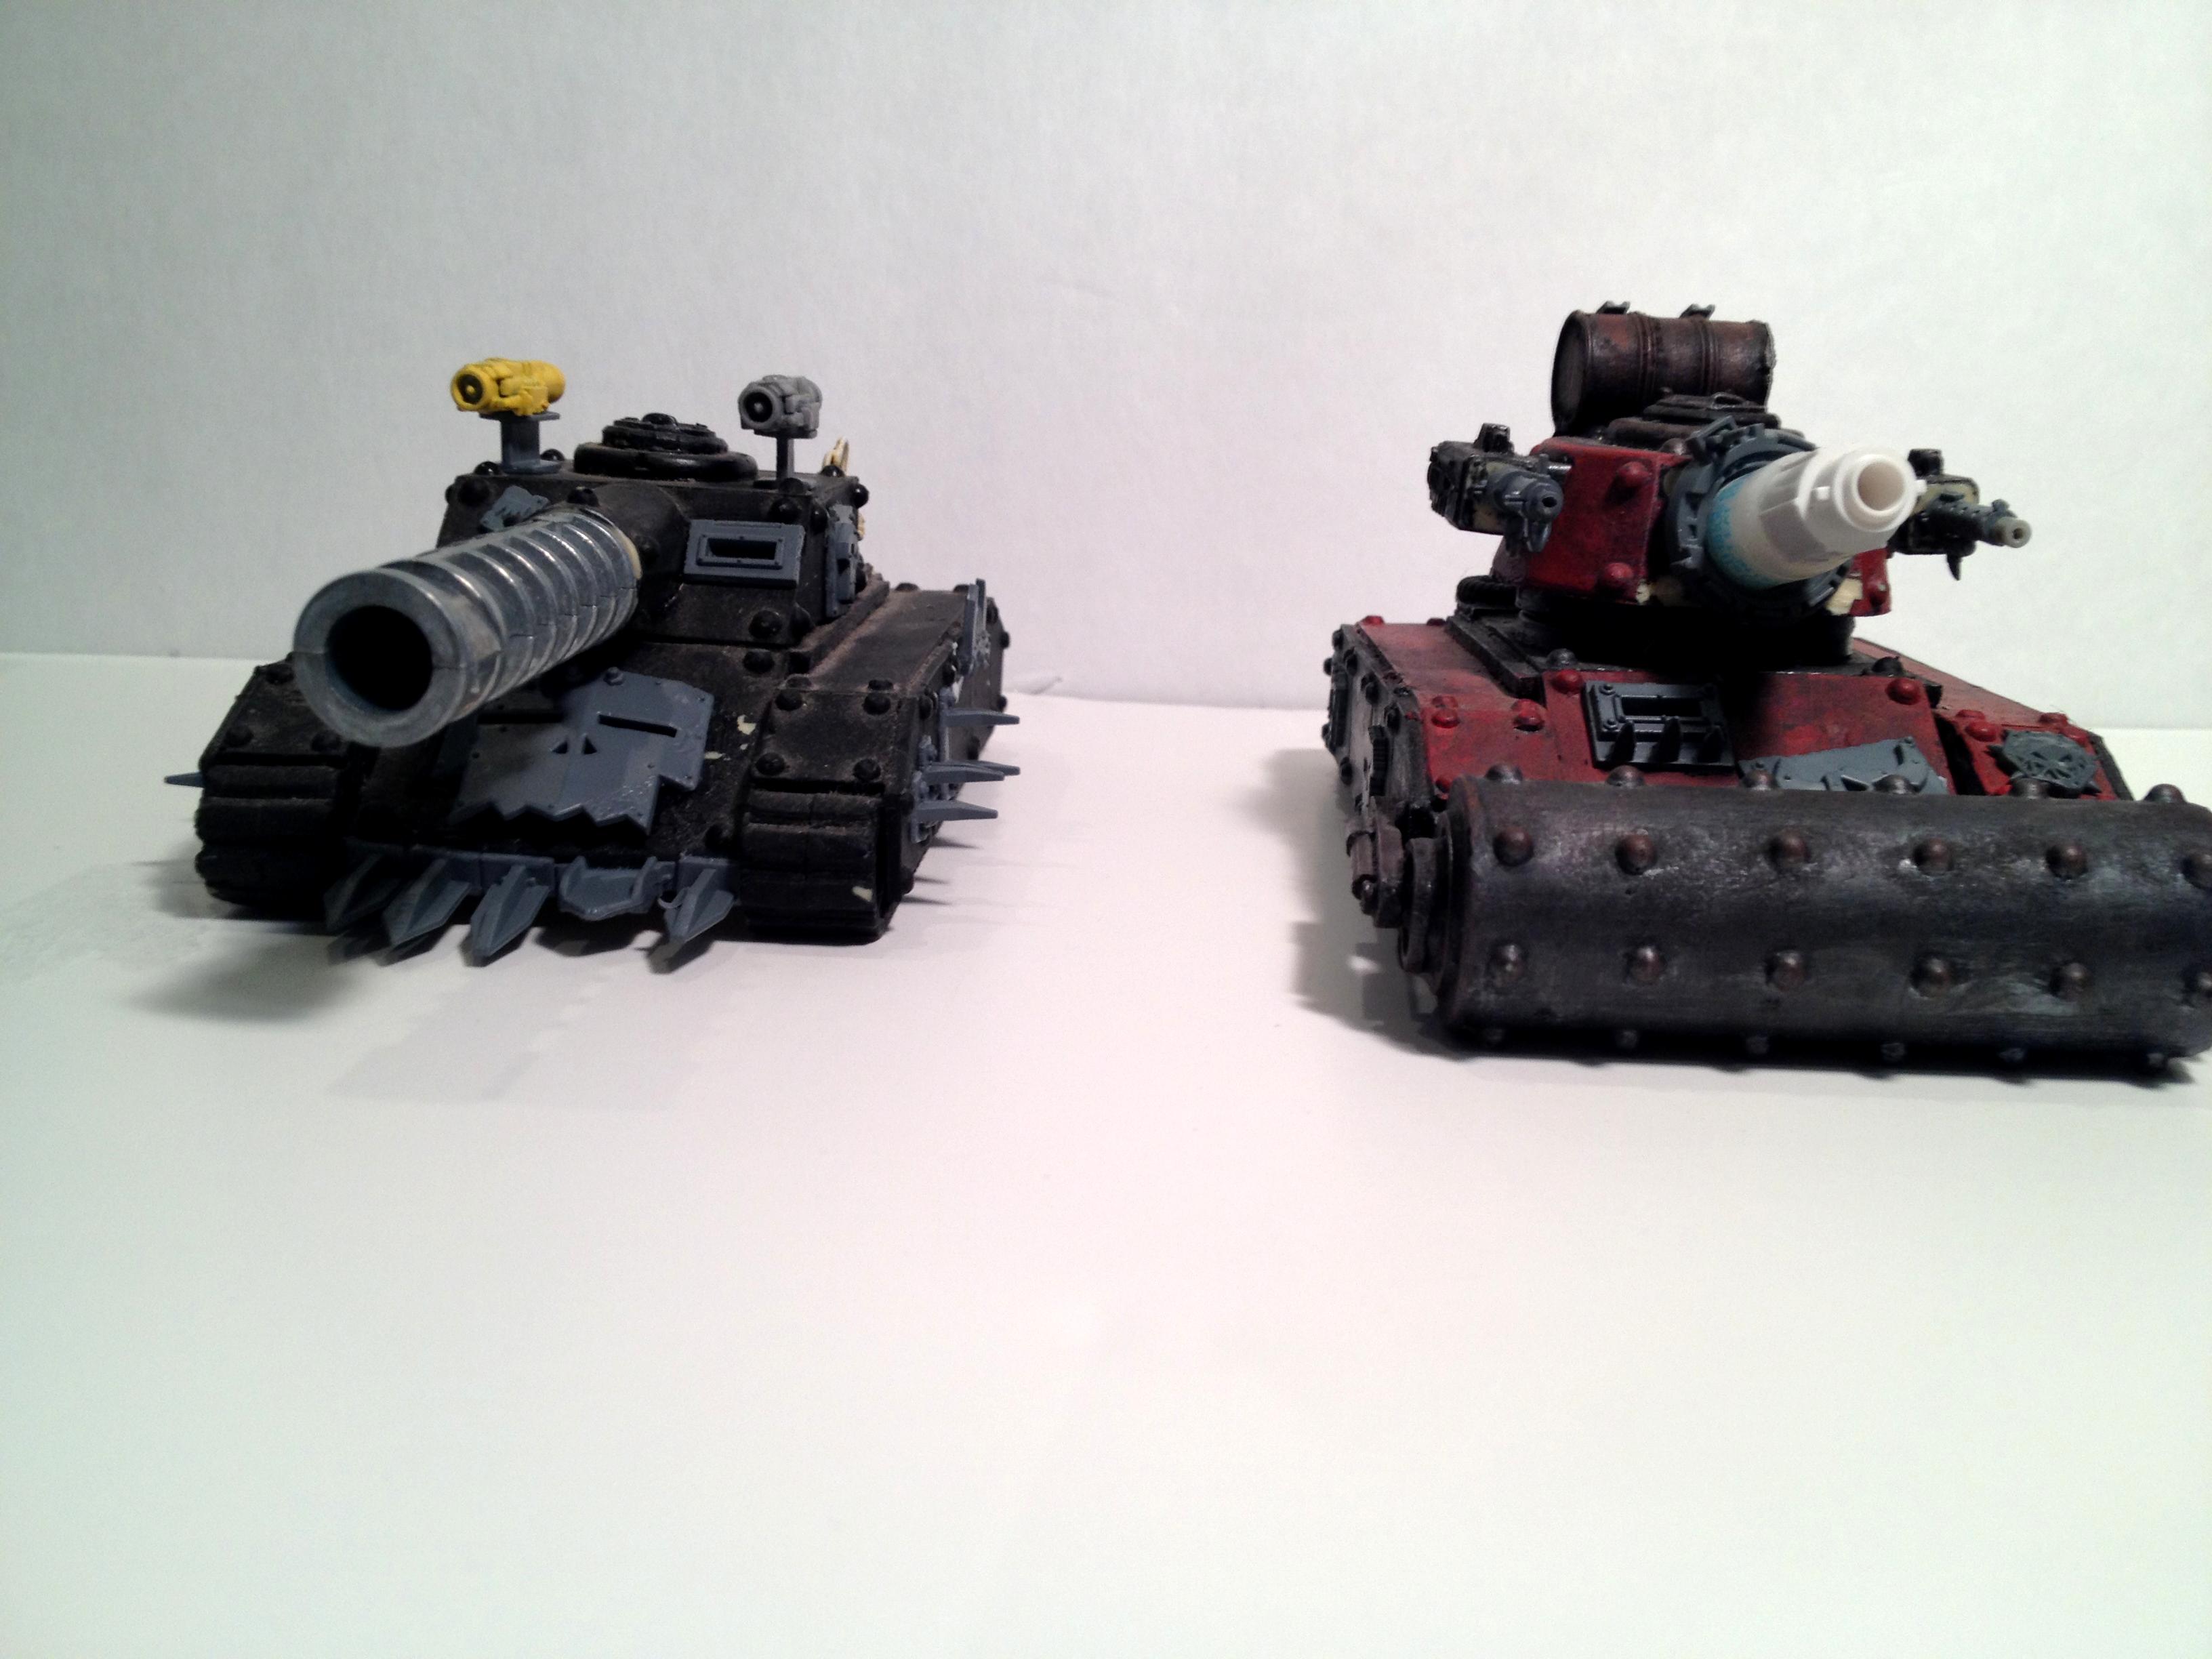 Ork tanks